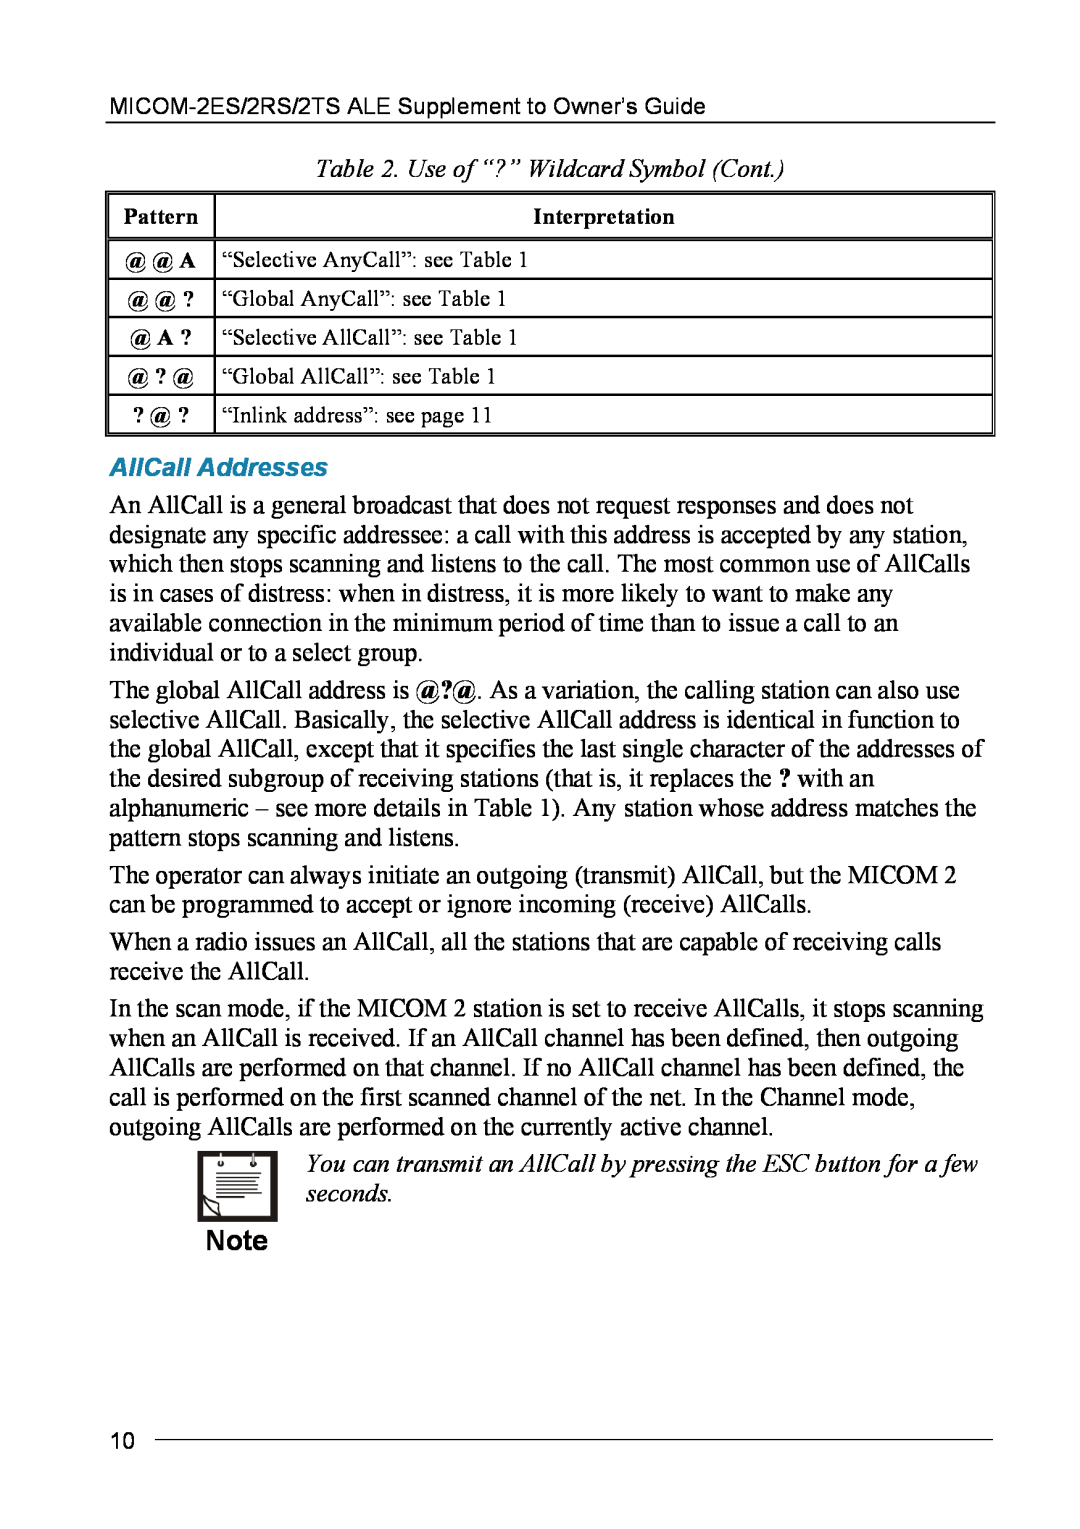 Motorola MICOM-2ES/2RS/2TS ALE manual AllCall Addresses, Use of “?” Wildcard Symbol Cont 